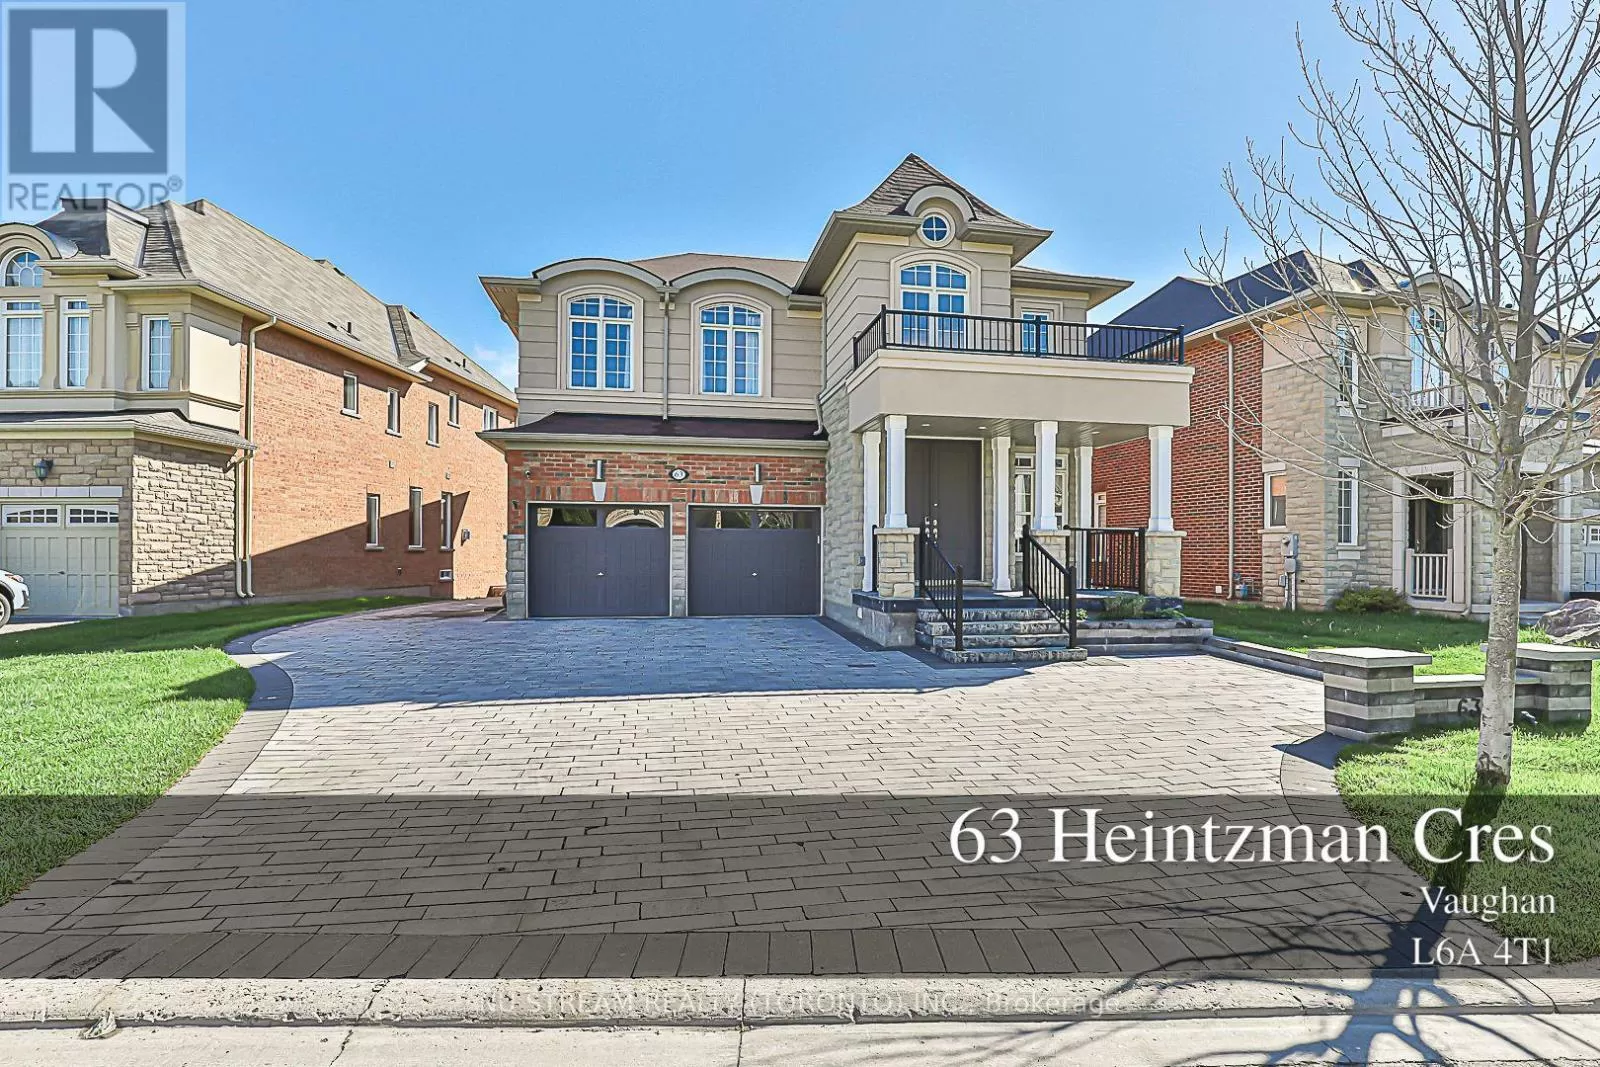 House for rent: 63 Heintzman Crescent, Vaughan, Ontario L6A 4T1